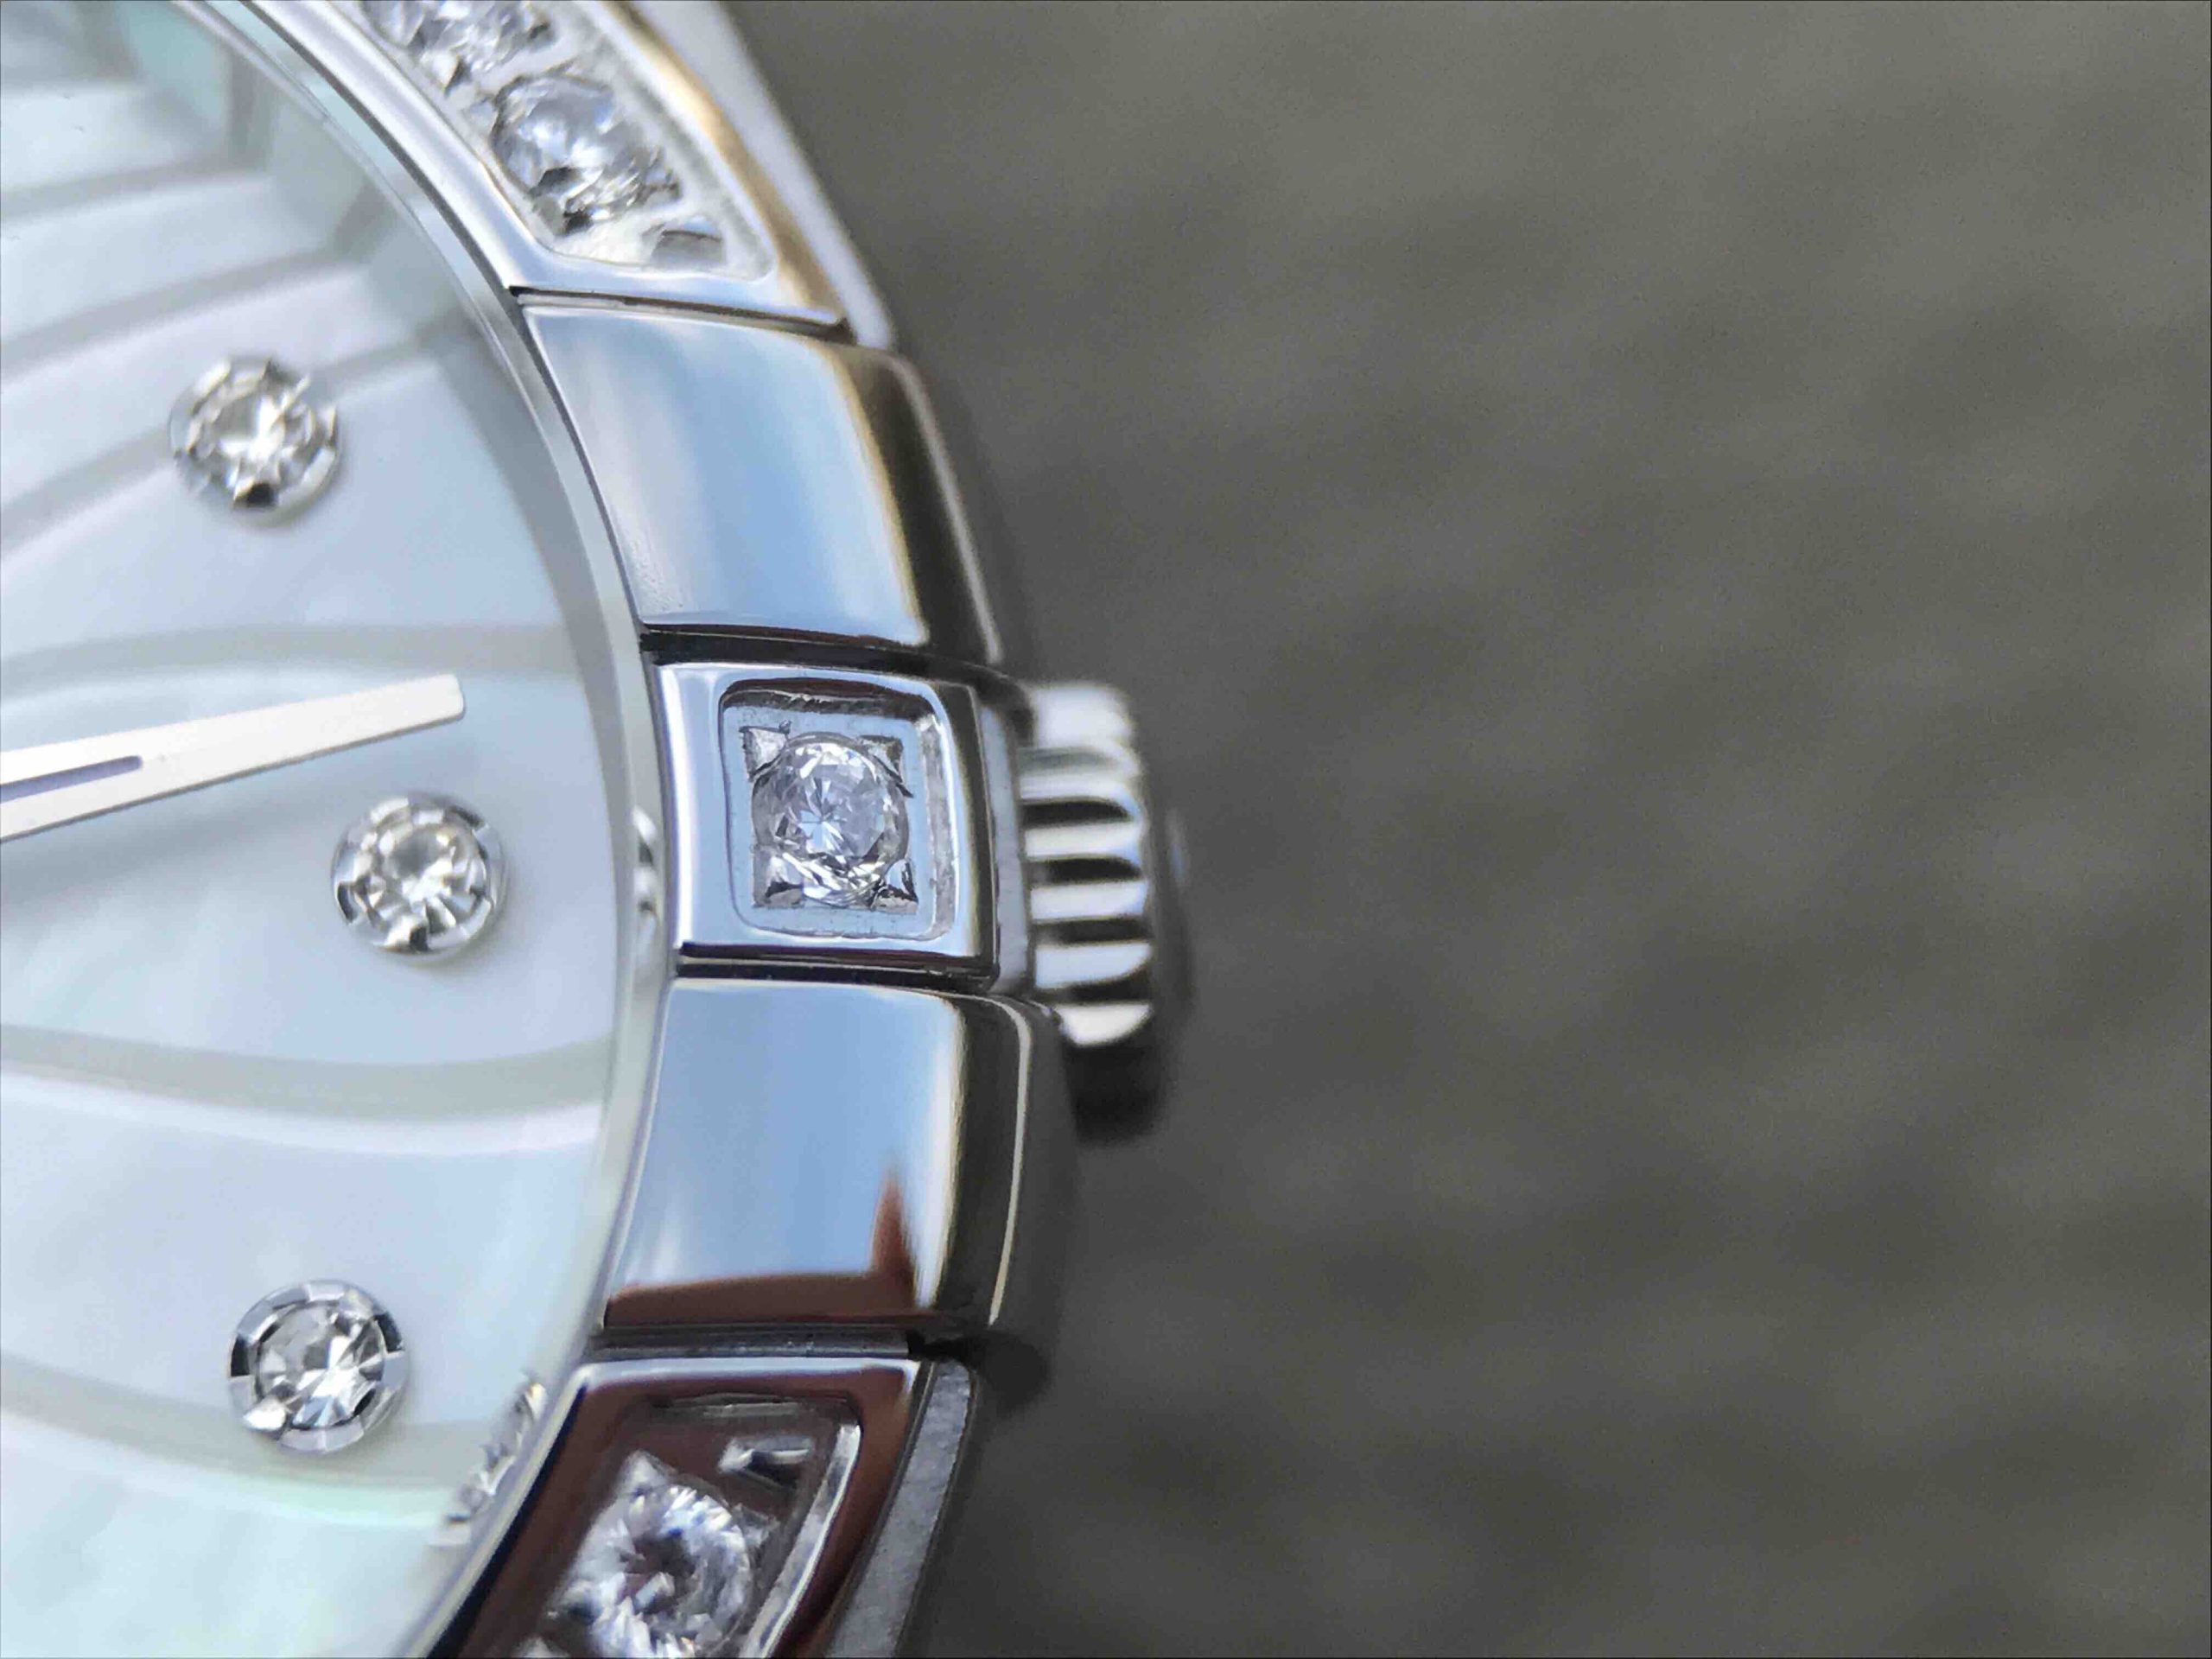 2023051403374493 scaled - 歐米茄星座繫列 高仿手錶帶上 v6歐米茄星座繫列27毫米石英￥3380